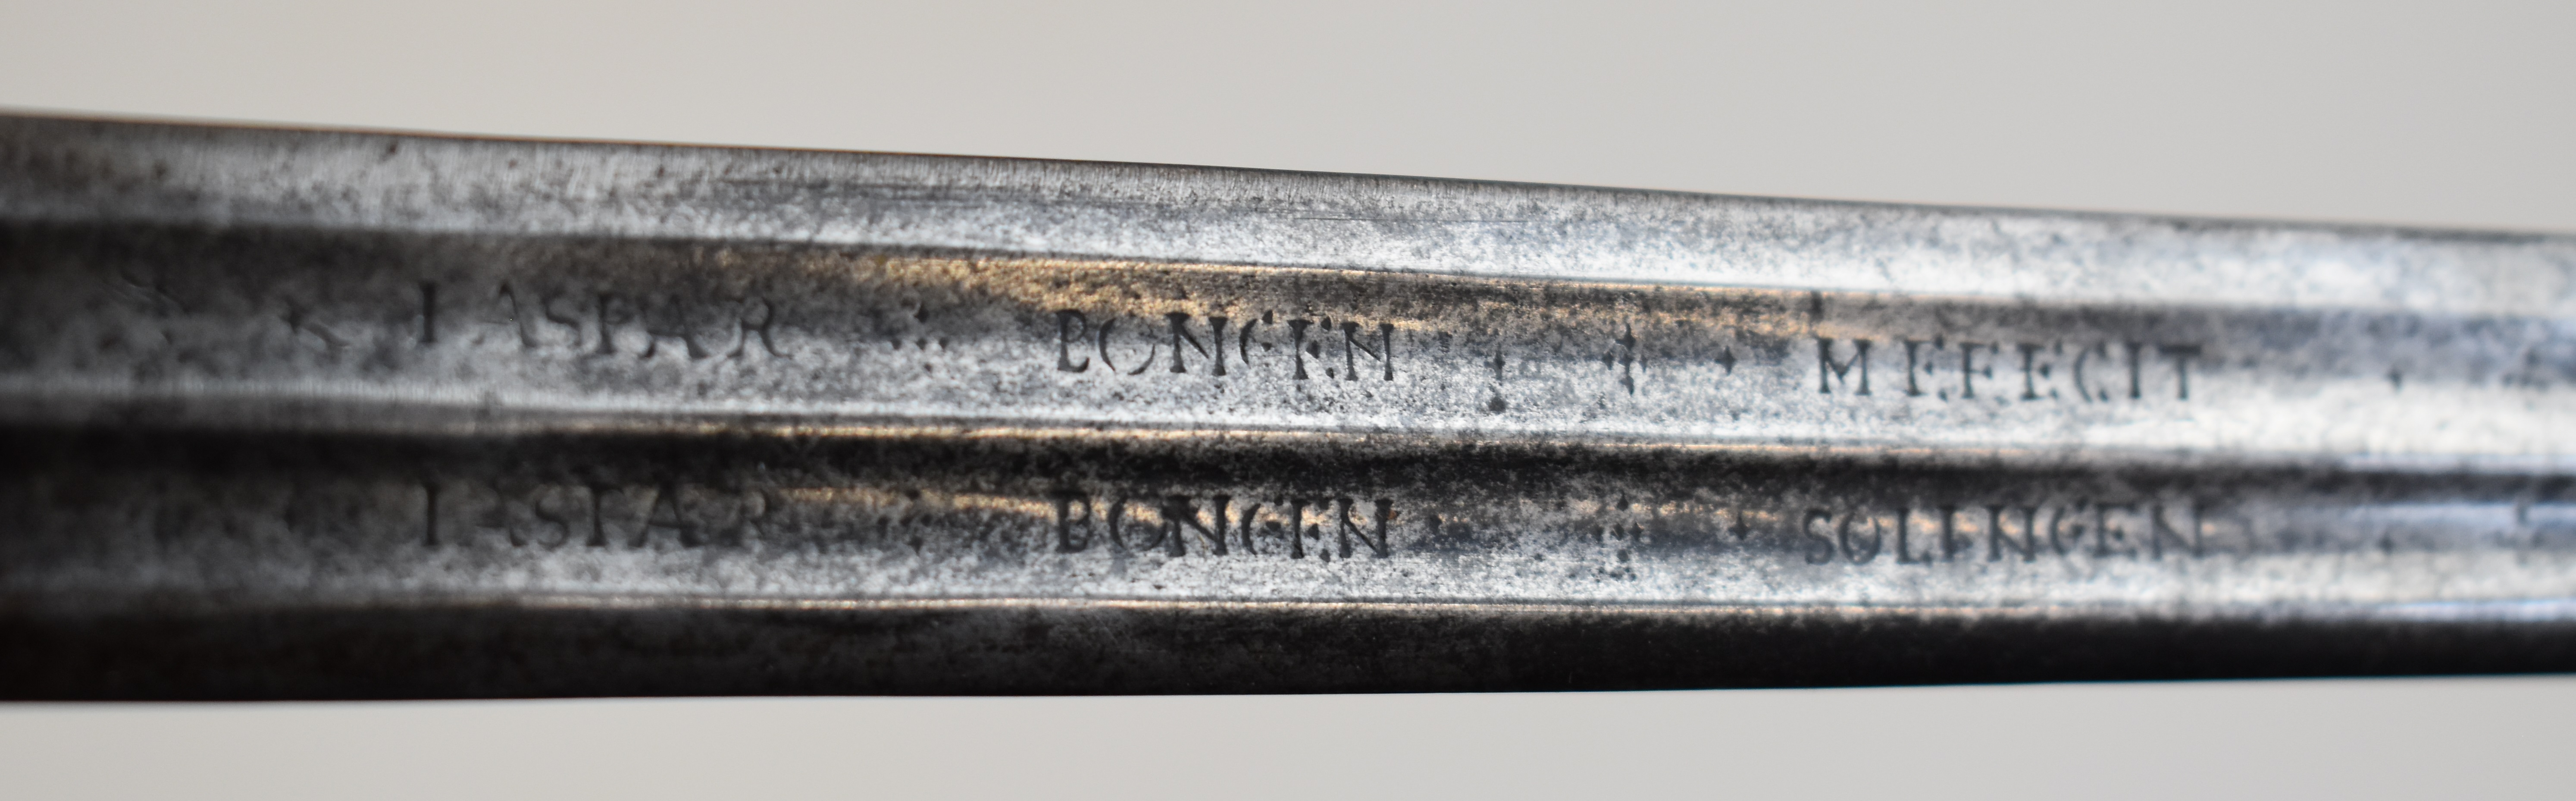 German late 16th / early 17thC sword with later hilt, blade inscribed 'Jaspar Bongen me fecit - Image 2 of 17